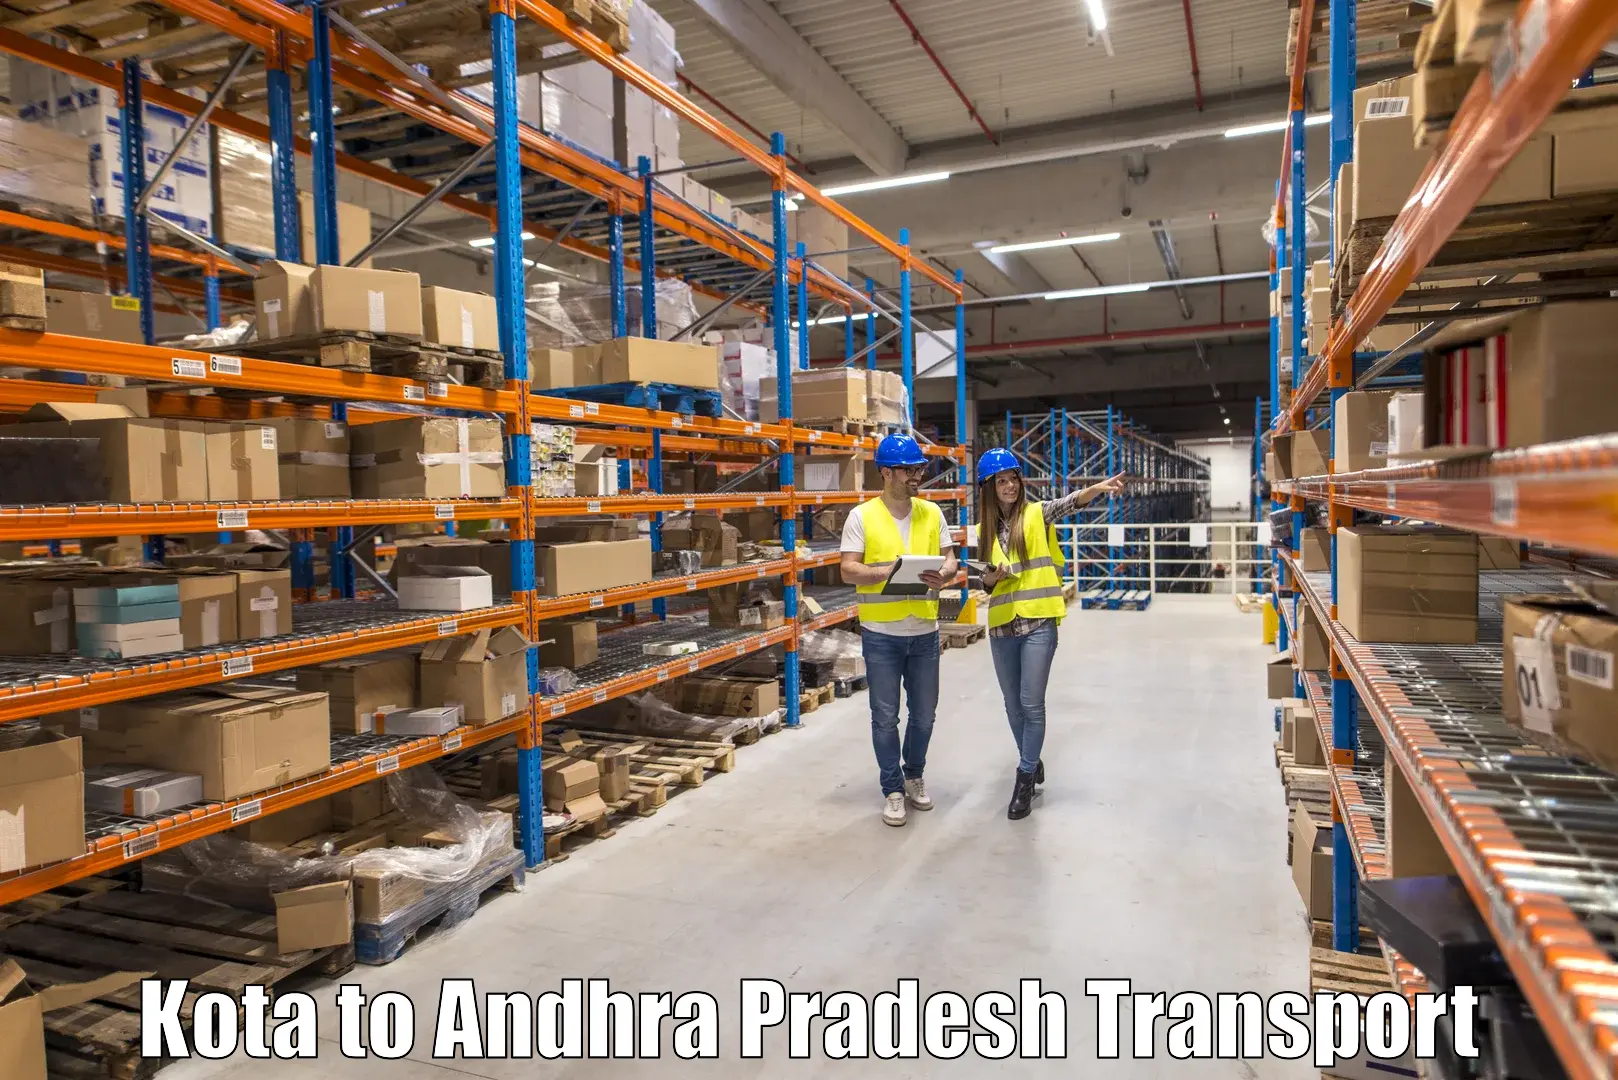 Truck transport companies in India Kota to Challapalli